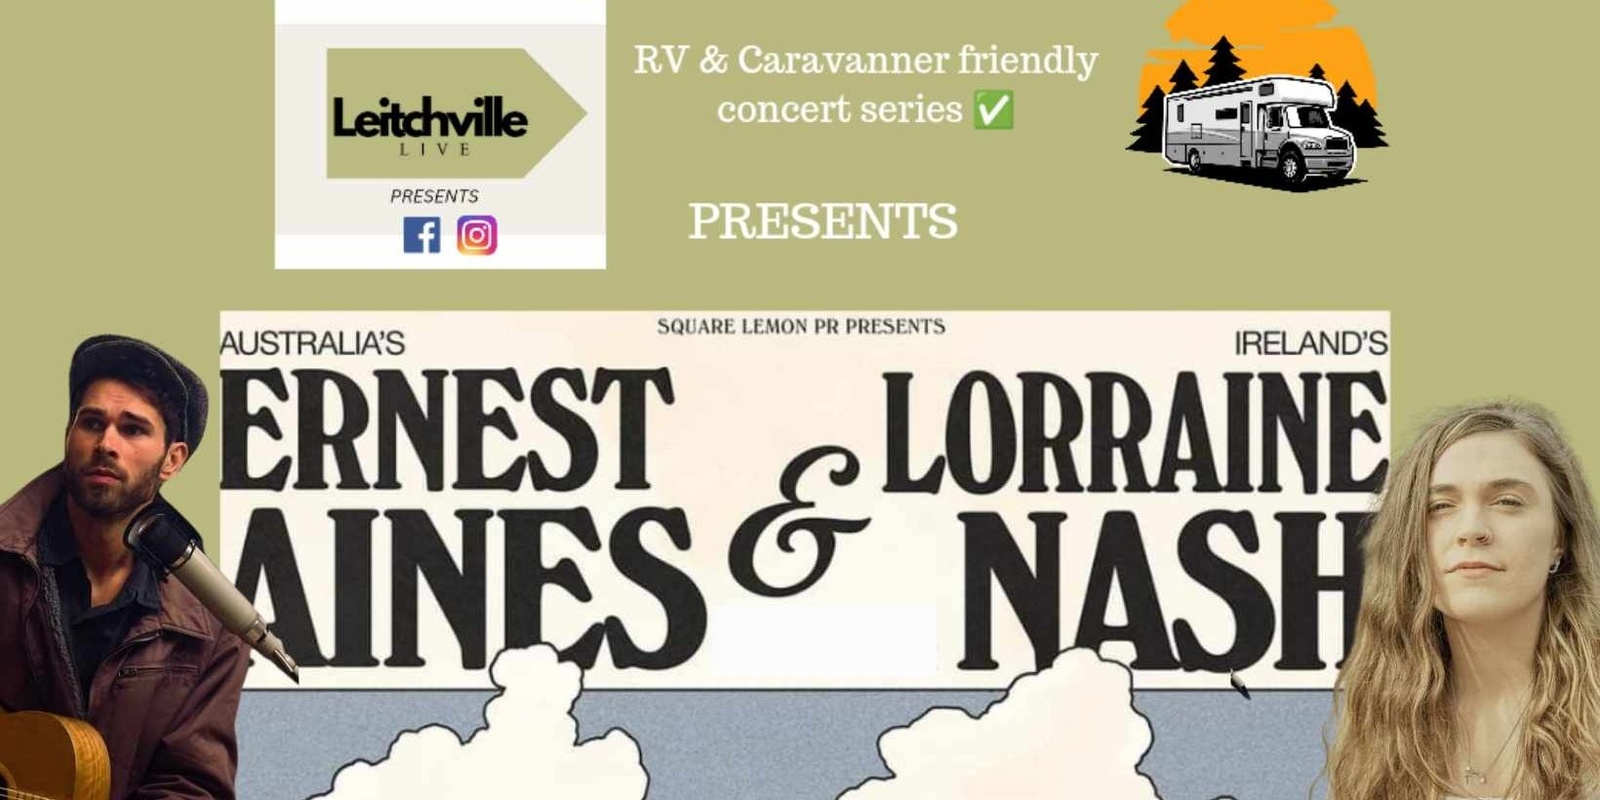 Banner image for Leitchville LIVE Presents - Lorraine Nash (IRE)  &  Ernest Aines (AUS)